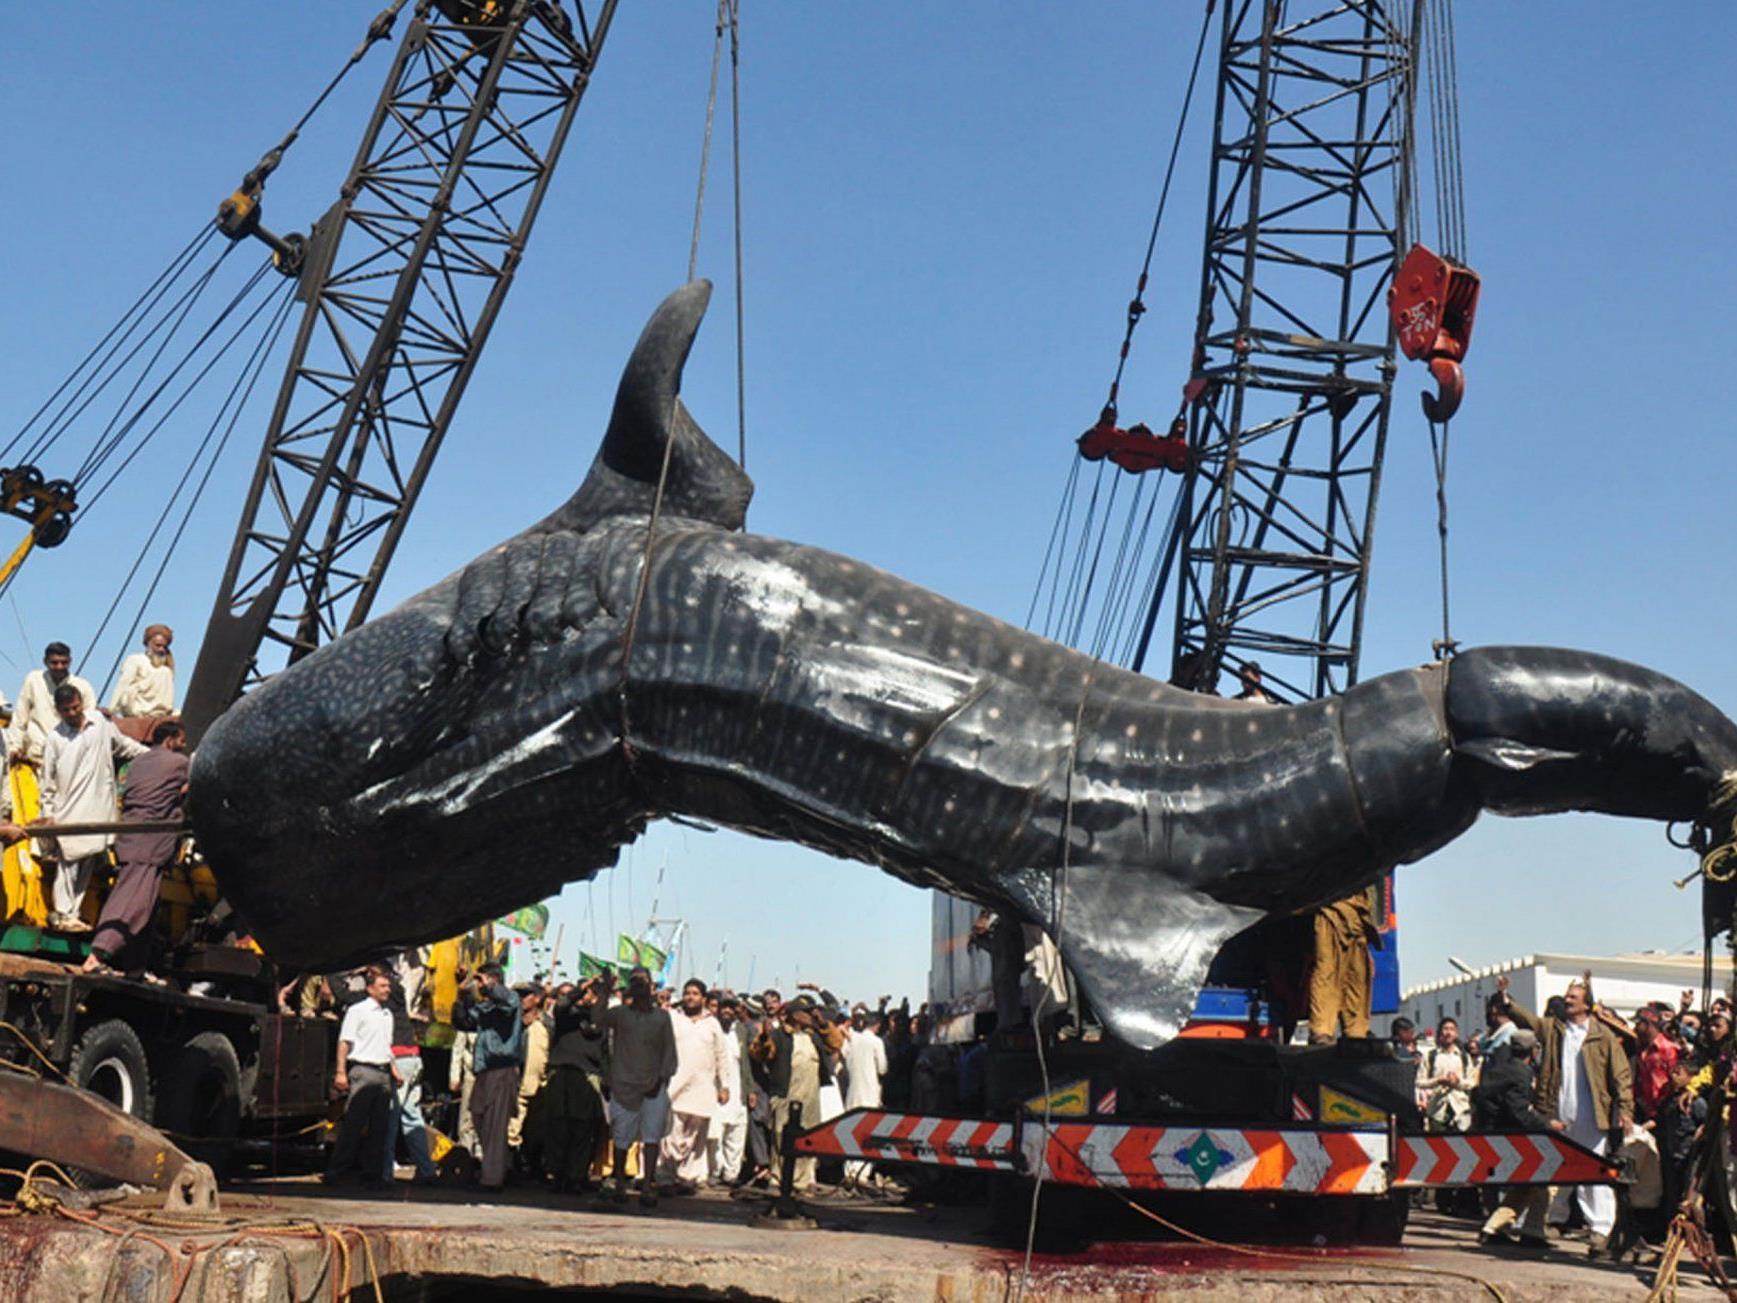 Riesiger Walhai wurde in Pakistan angeschwemmt.